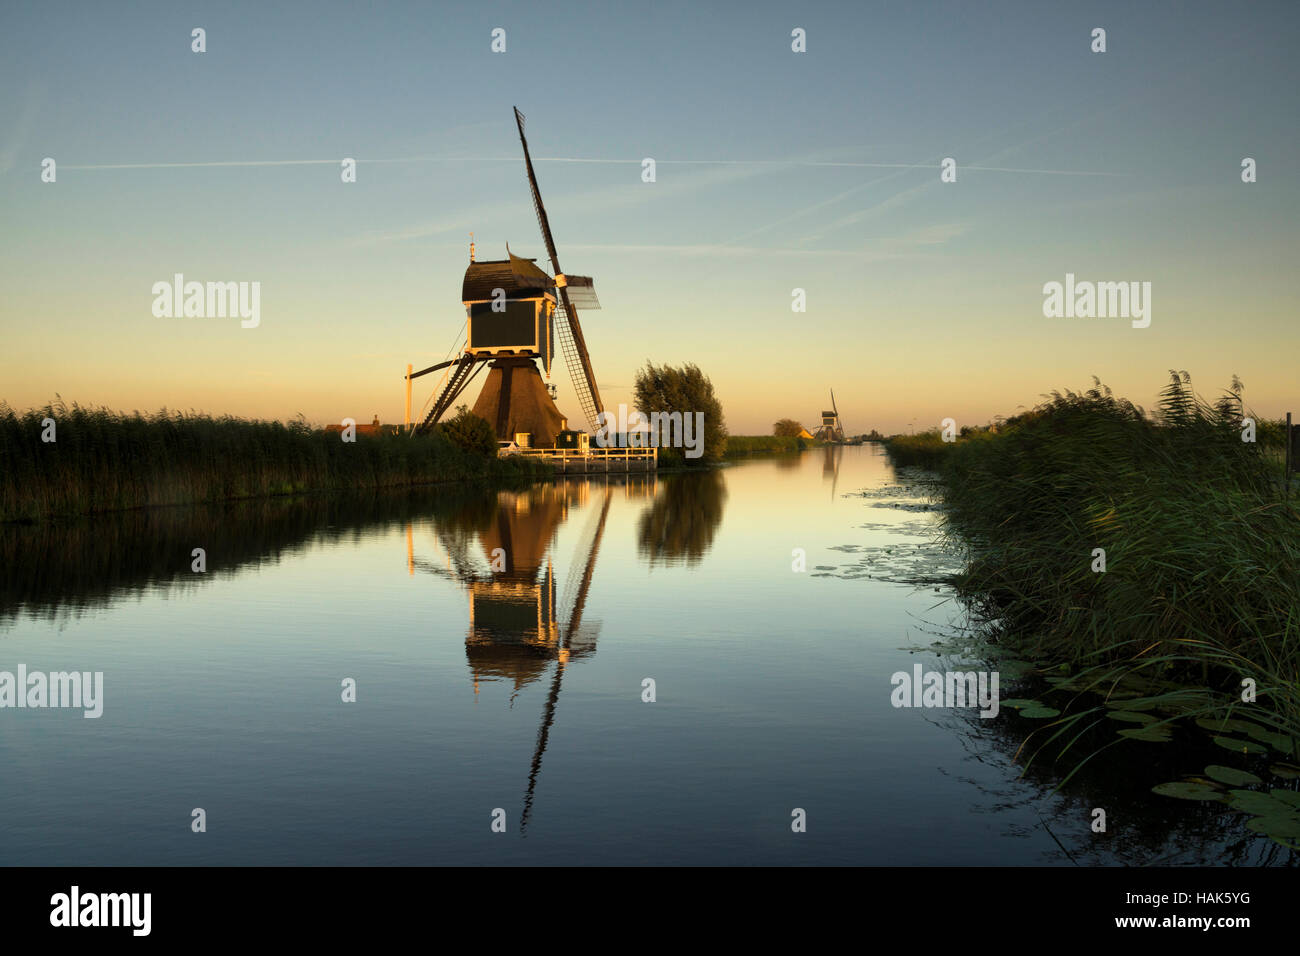 Windmill the Gelkenesmolen Stock Photo